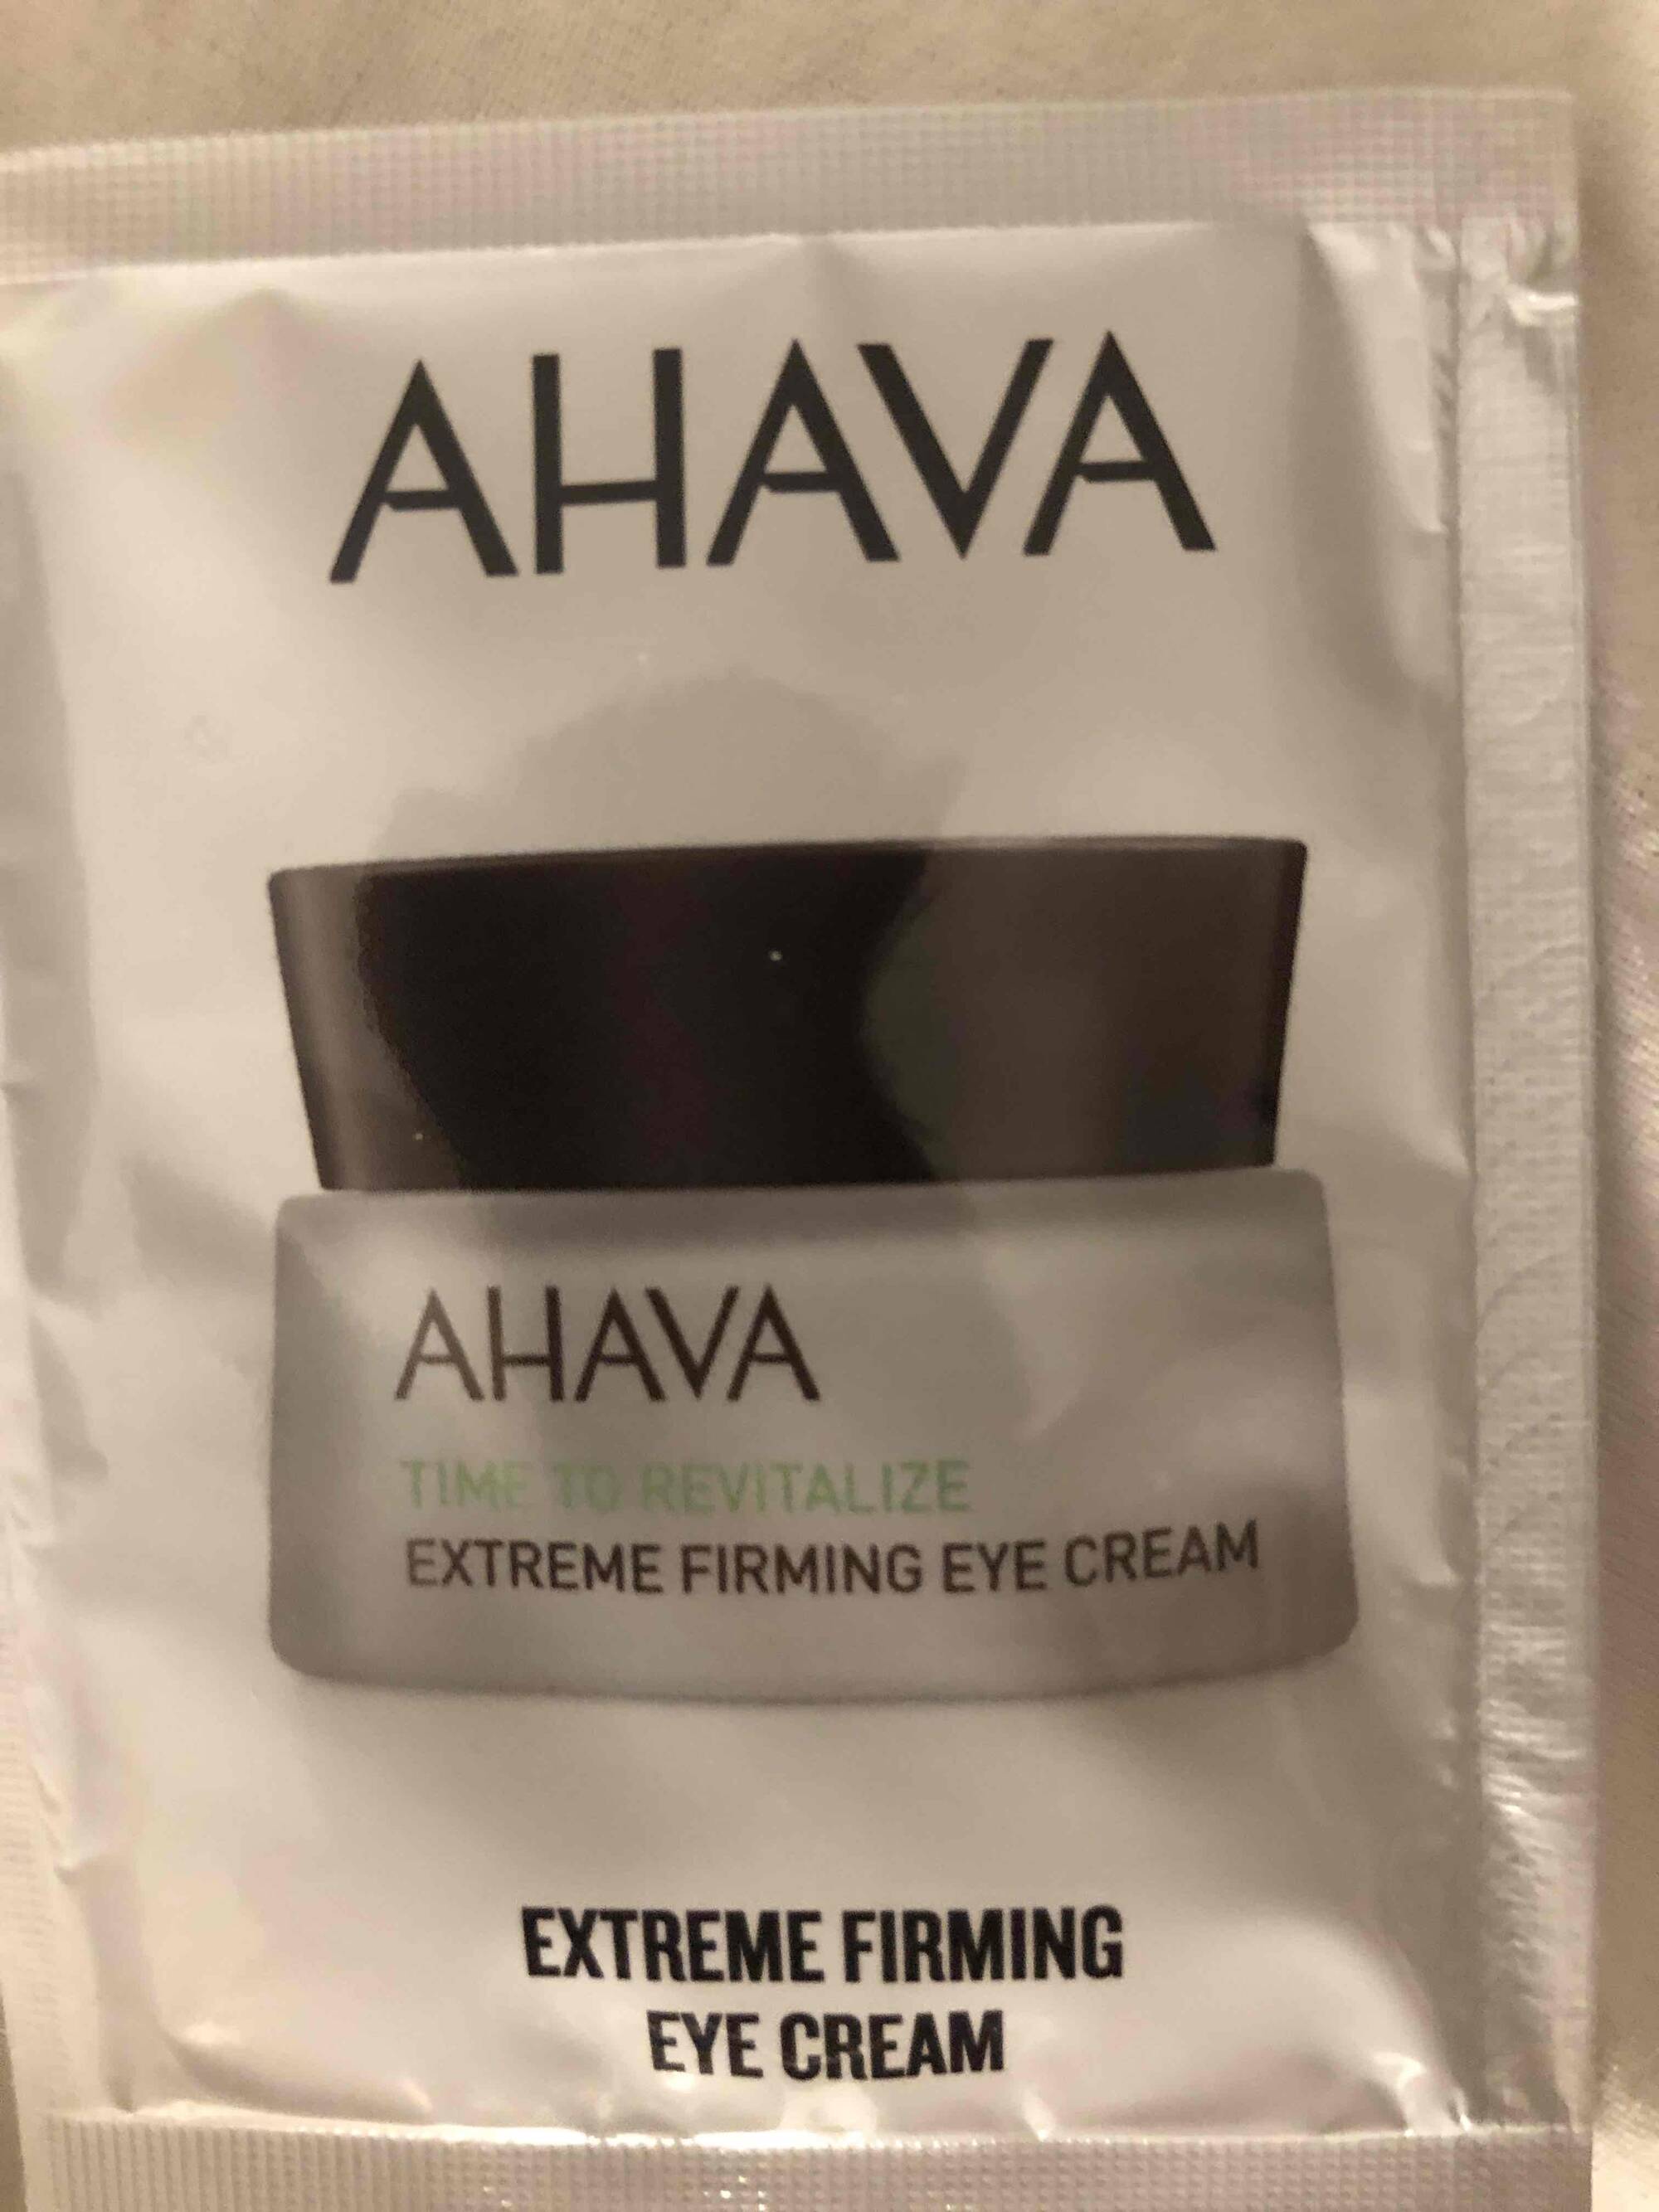 AHAVA - Extreme firming eye cream